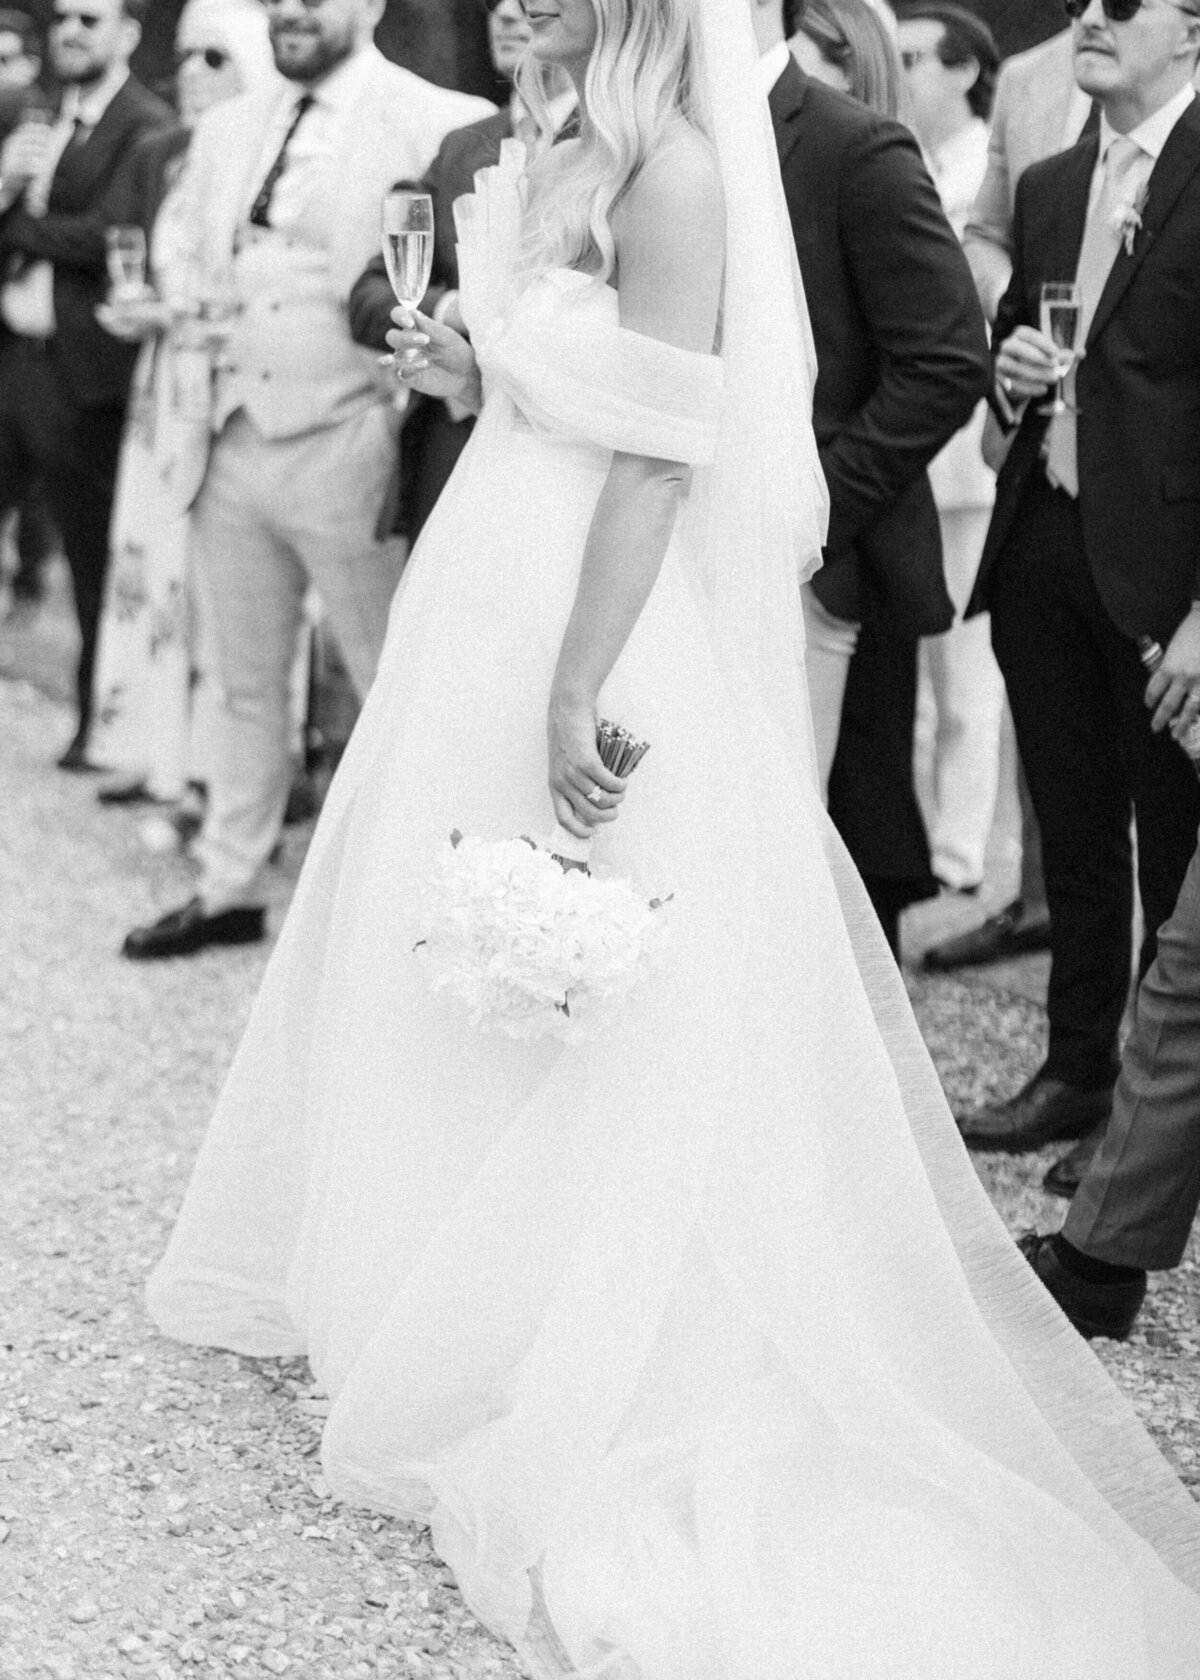 chloe-winstanley-weddings-newhite-bridal-dress-bouquet-black-white